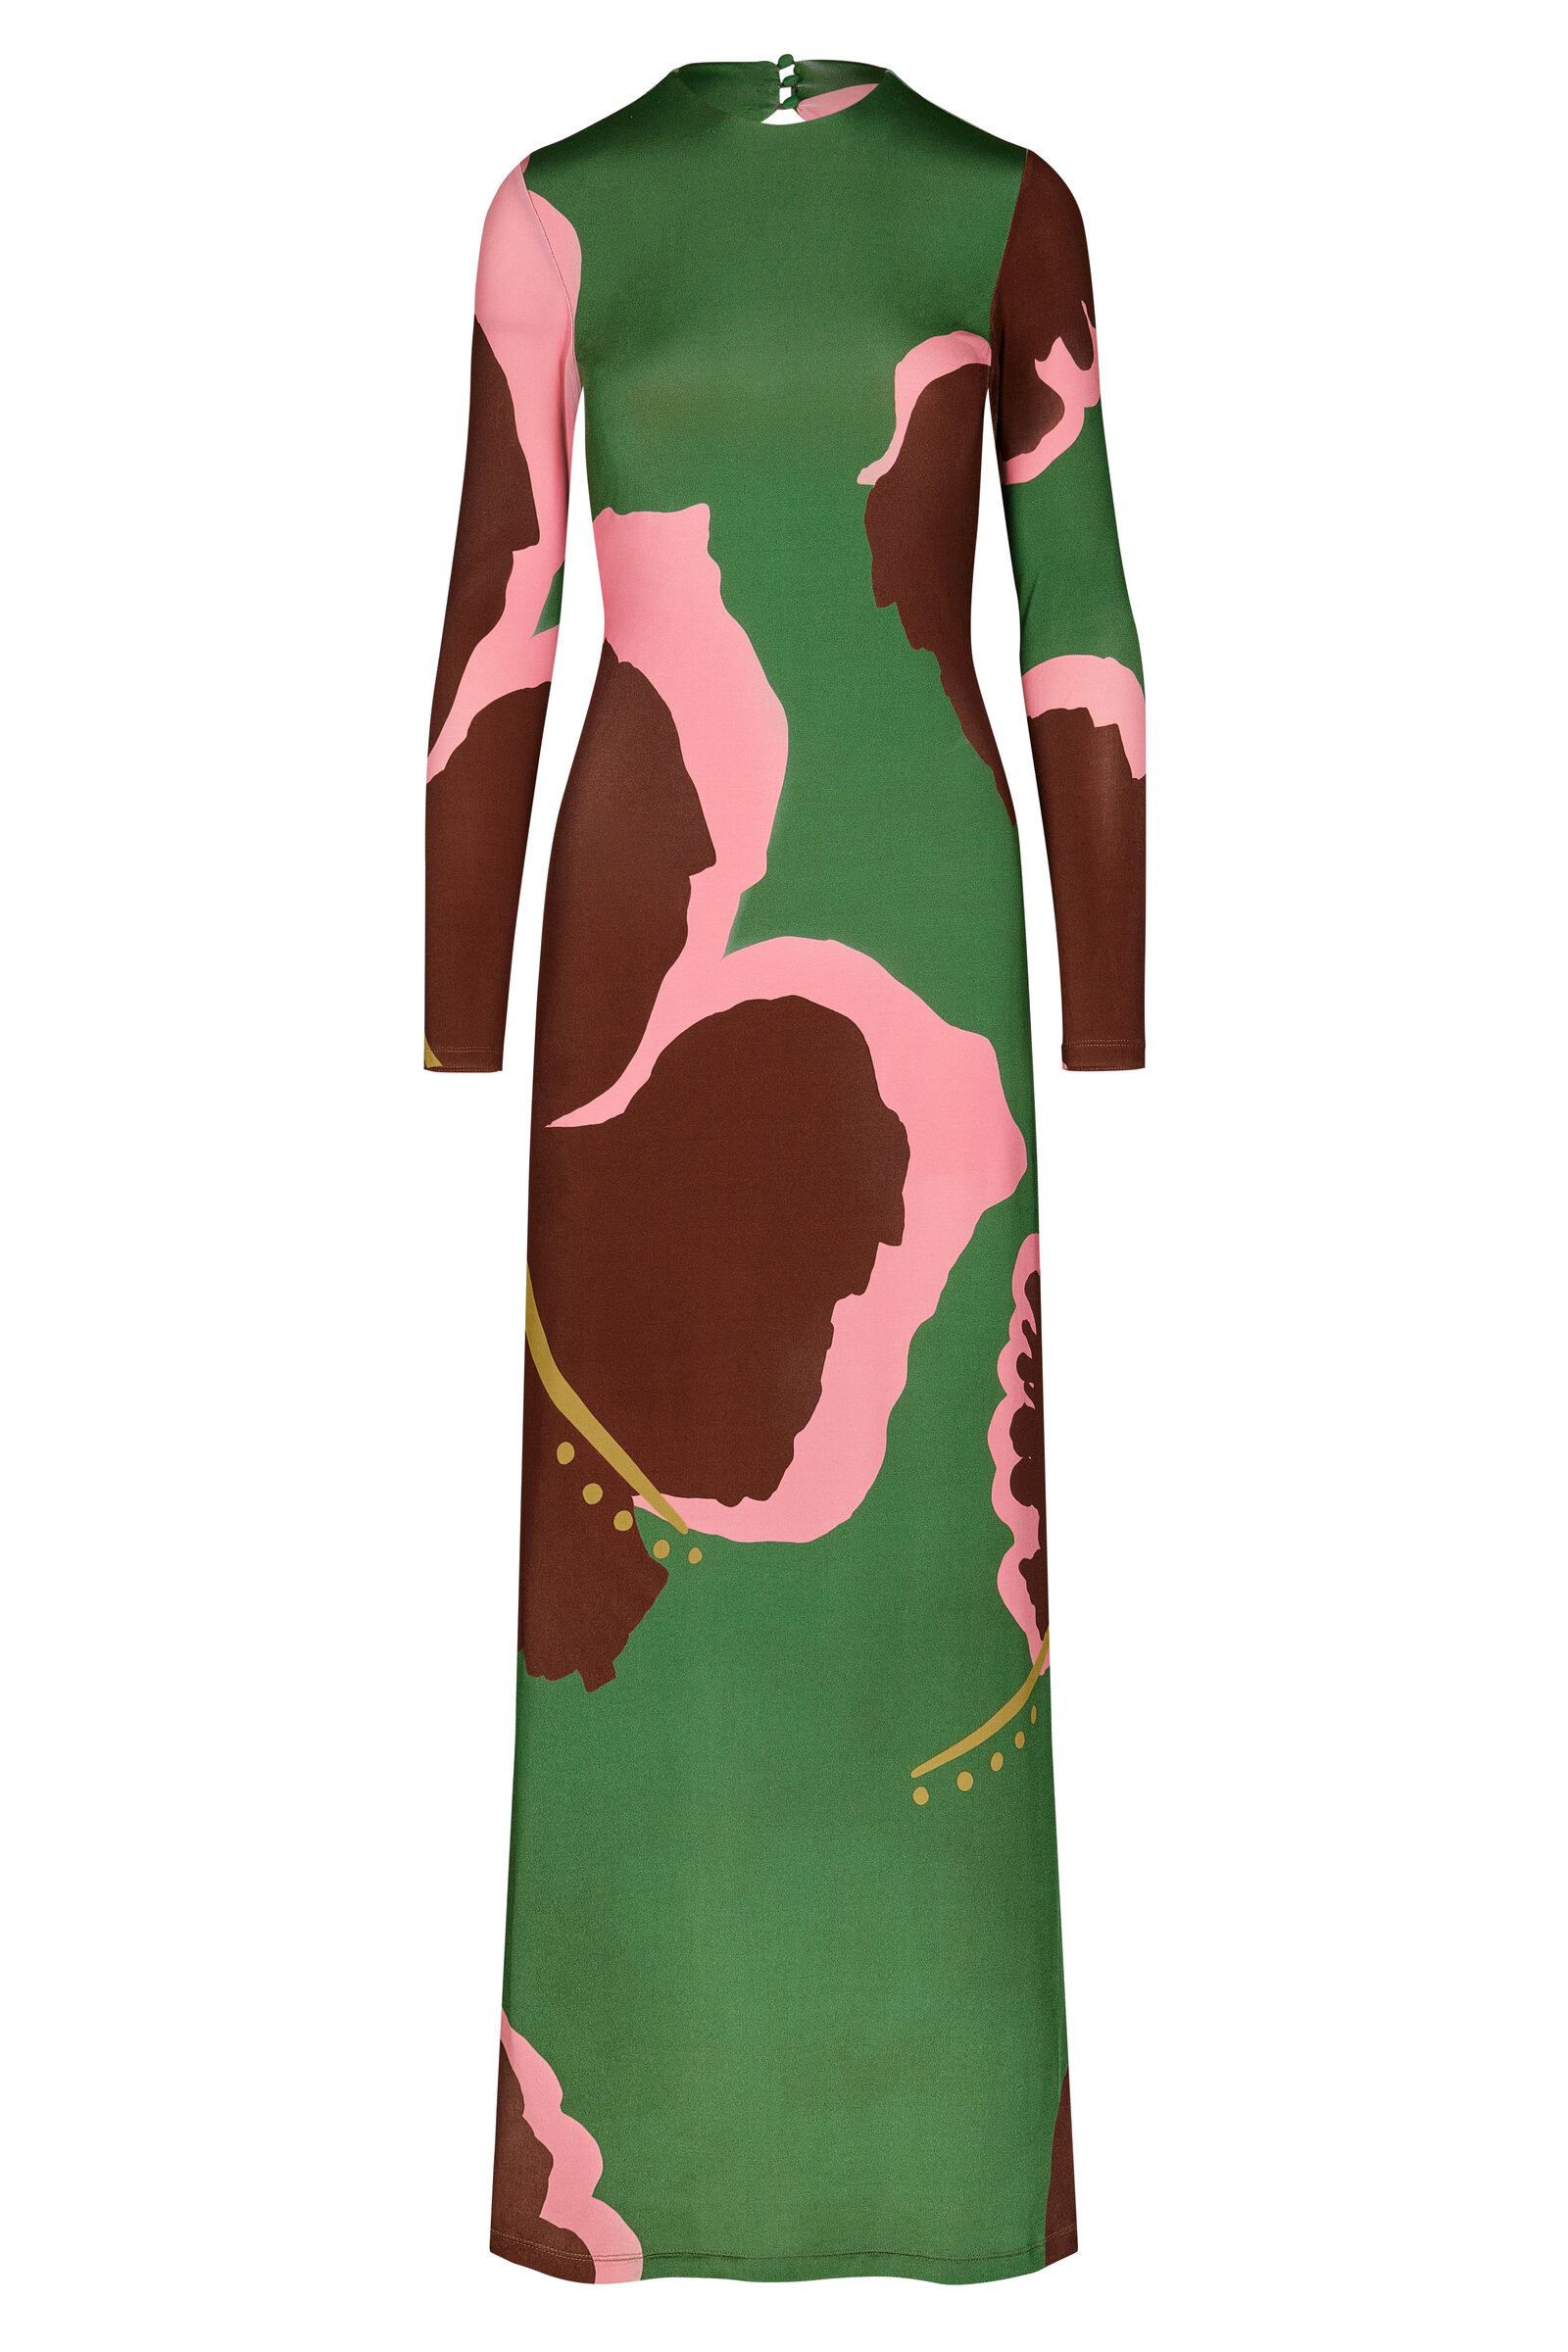 Johanna Ortiz - Spirit Of The West Printed Maxi Dress - Multi - US 6 - Moda Operandi